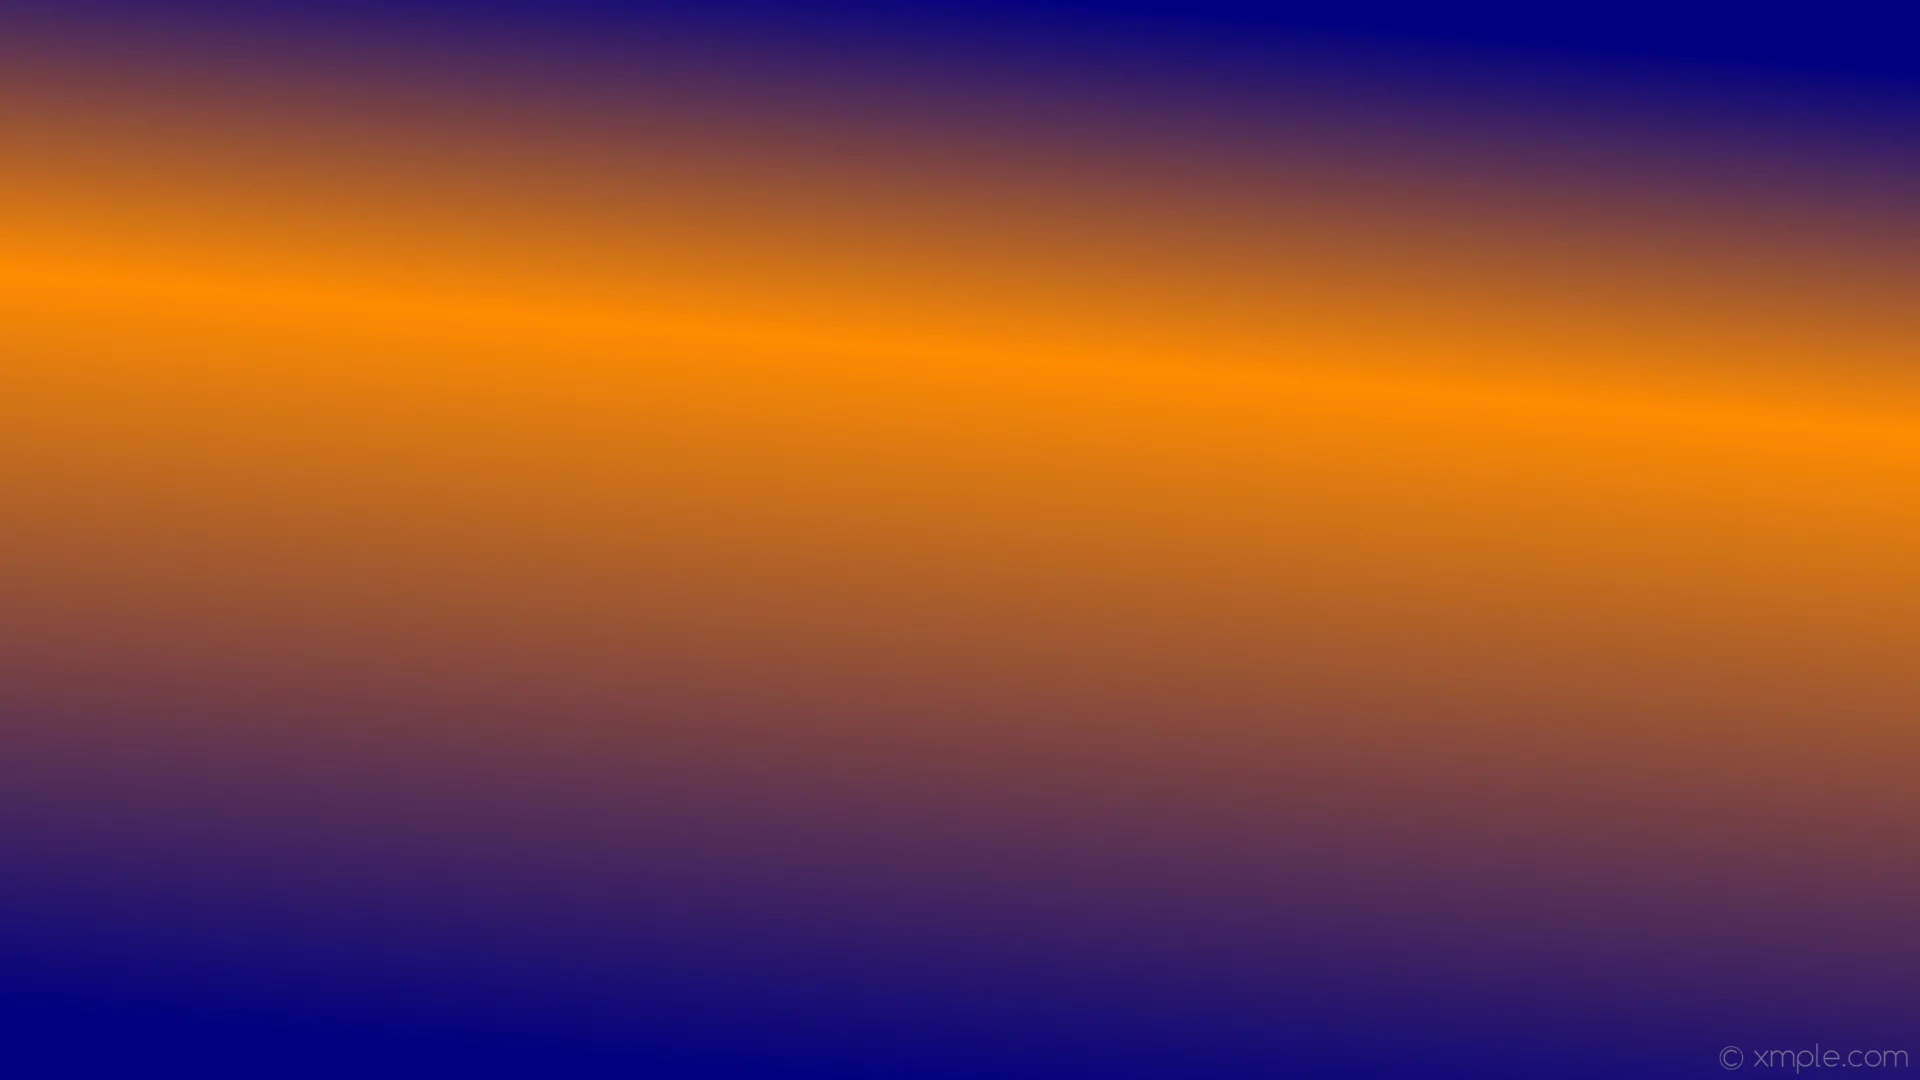 Wallpaper linear orange blue gradient highlight navy dark orange #ff8c00 75 33